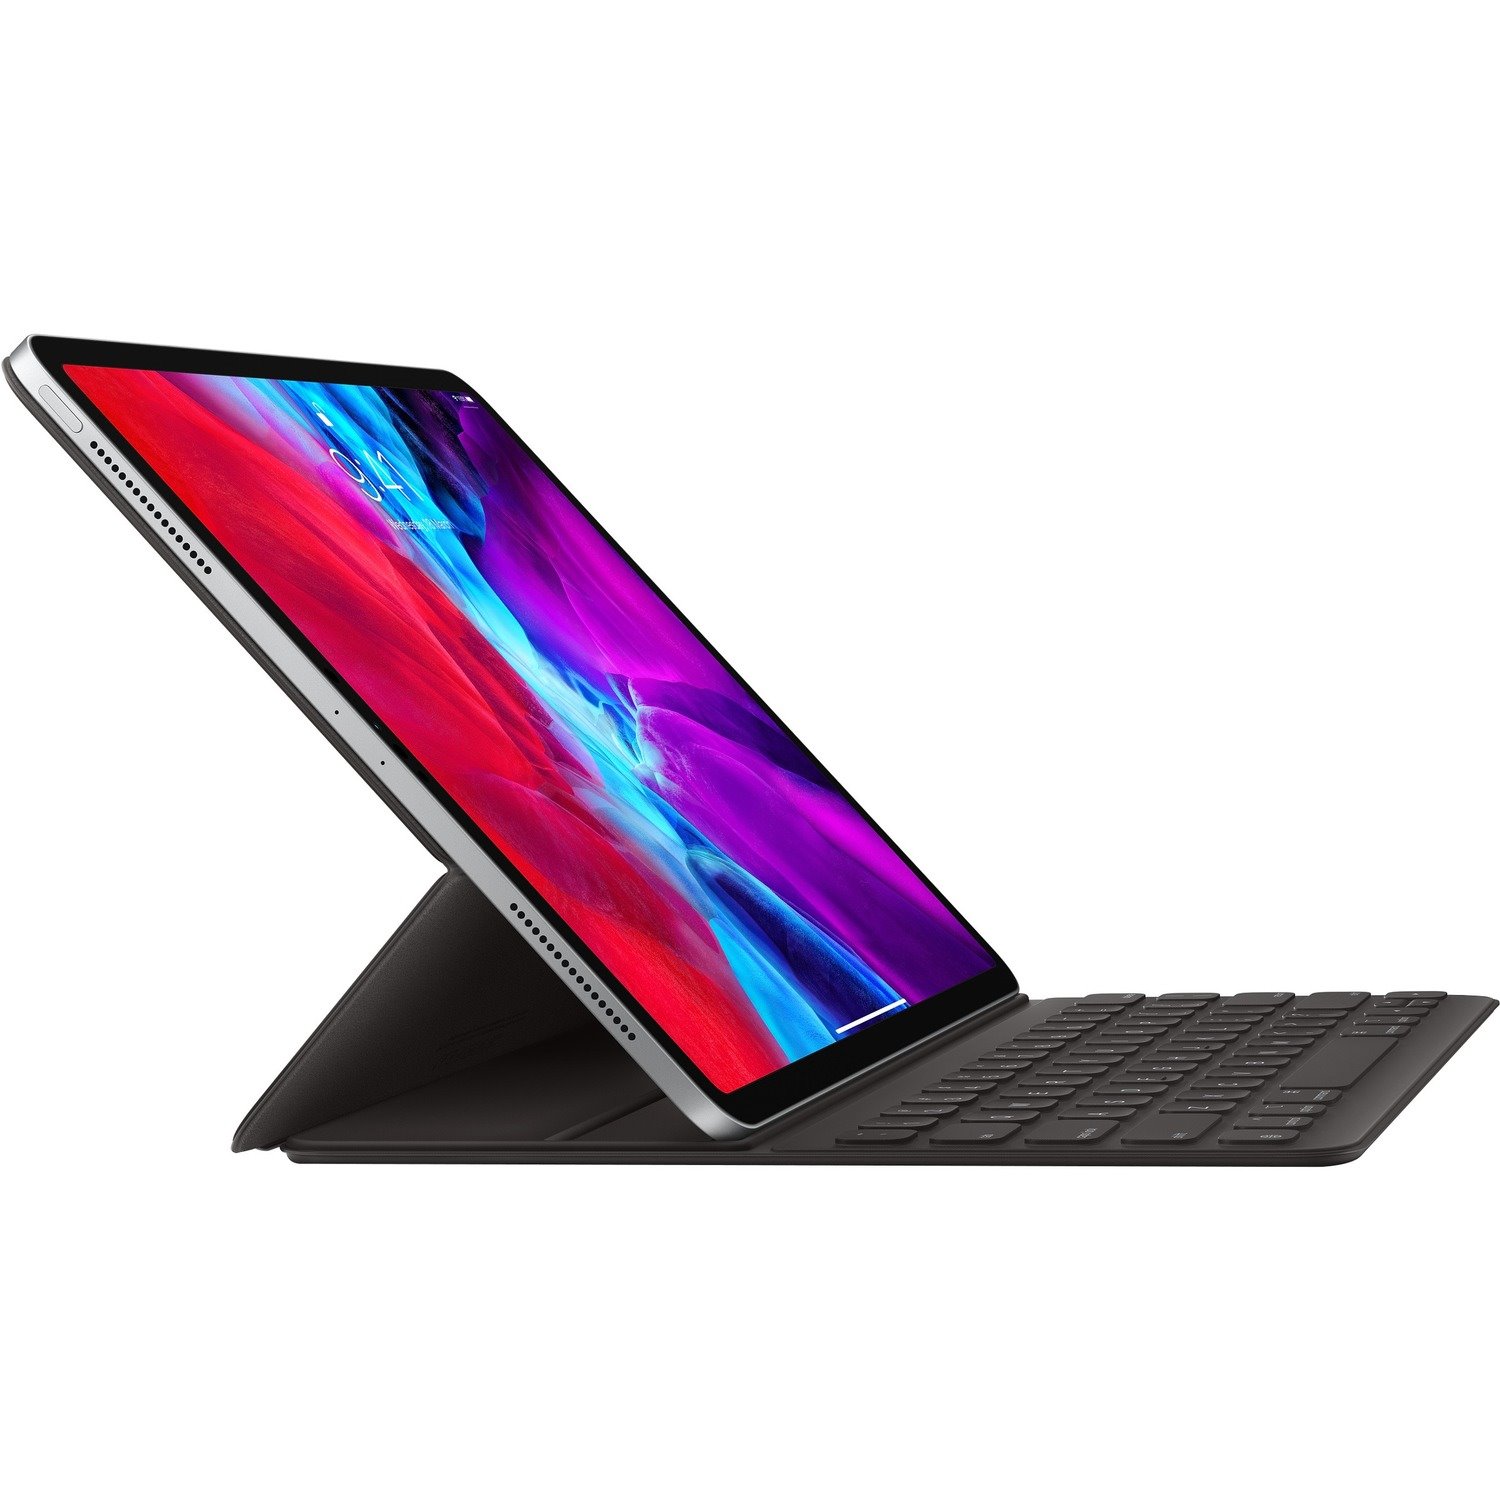 Apple Smart Keyboard Folio Keyboard/Cover Case (Folio) for 32.8 cm (12.9") Apple iPad Pro (3rd Generation), iPad Pro (4th Generation) Tablet